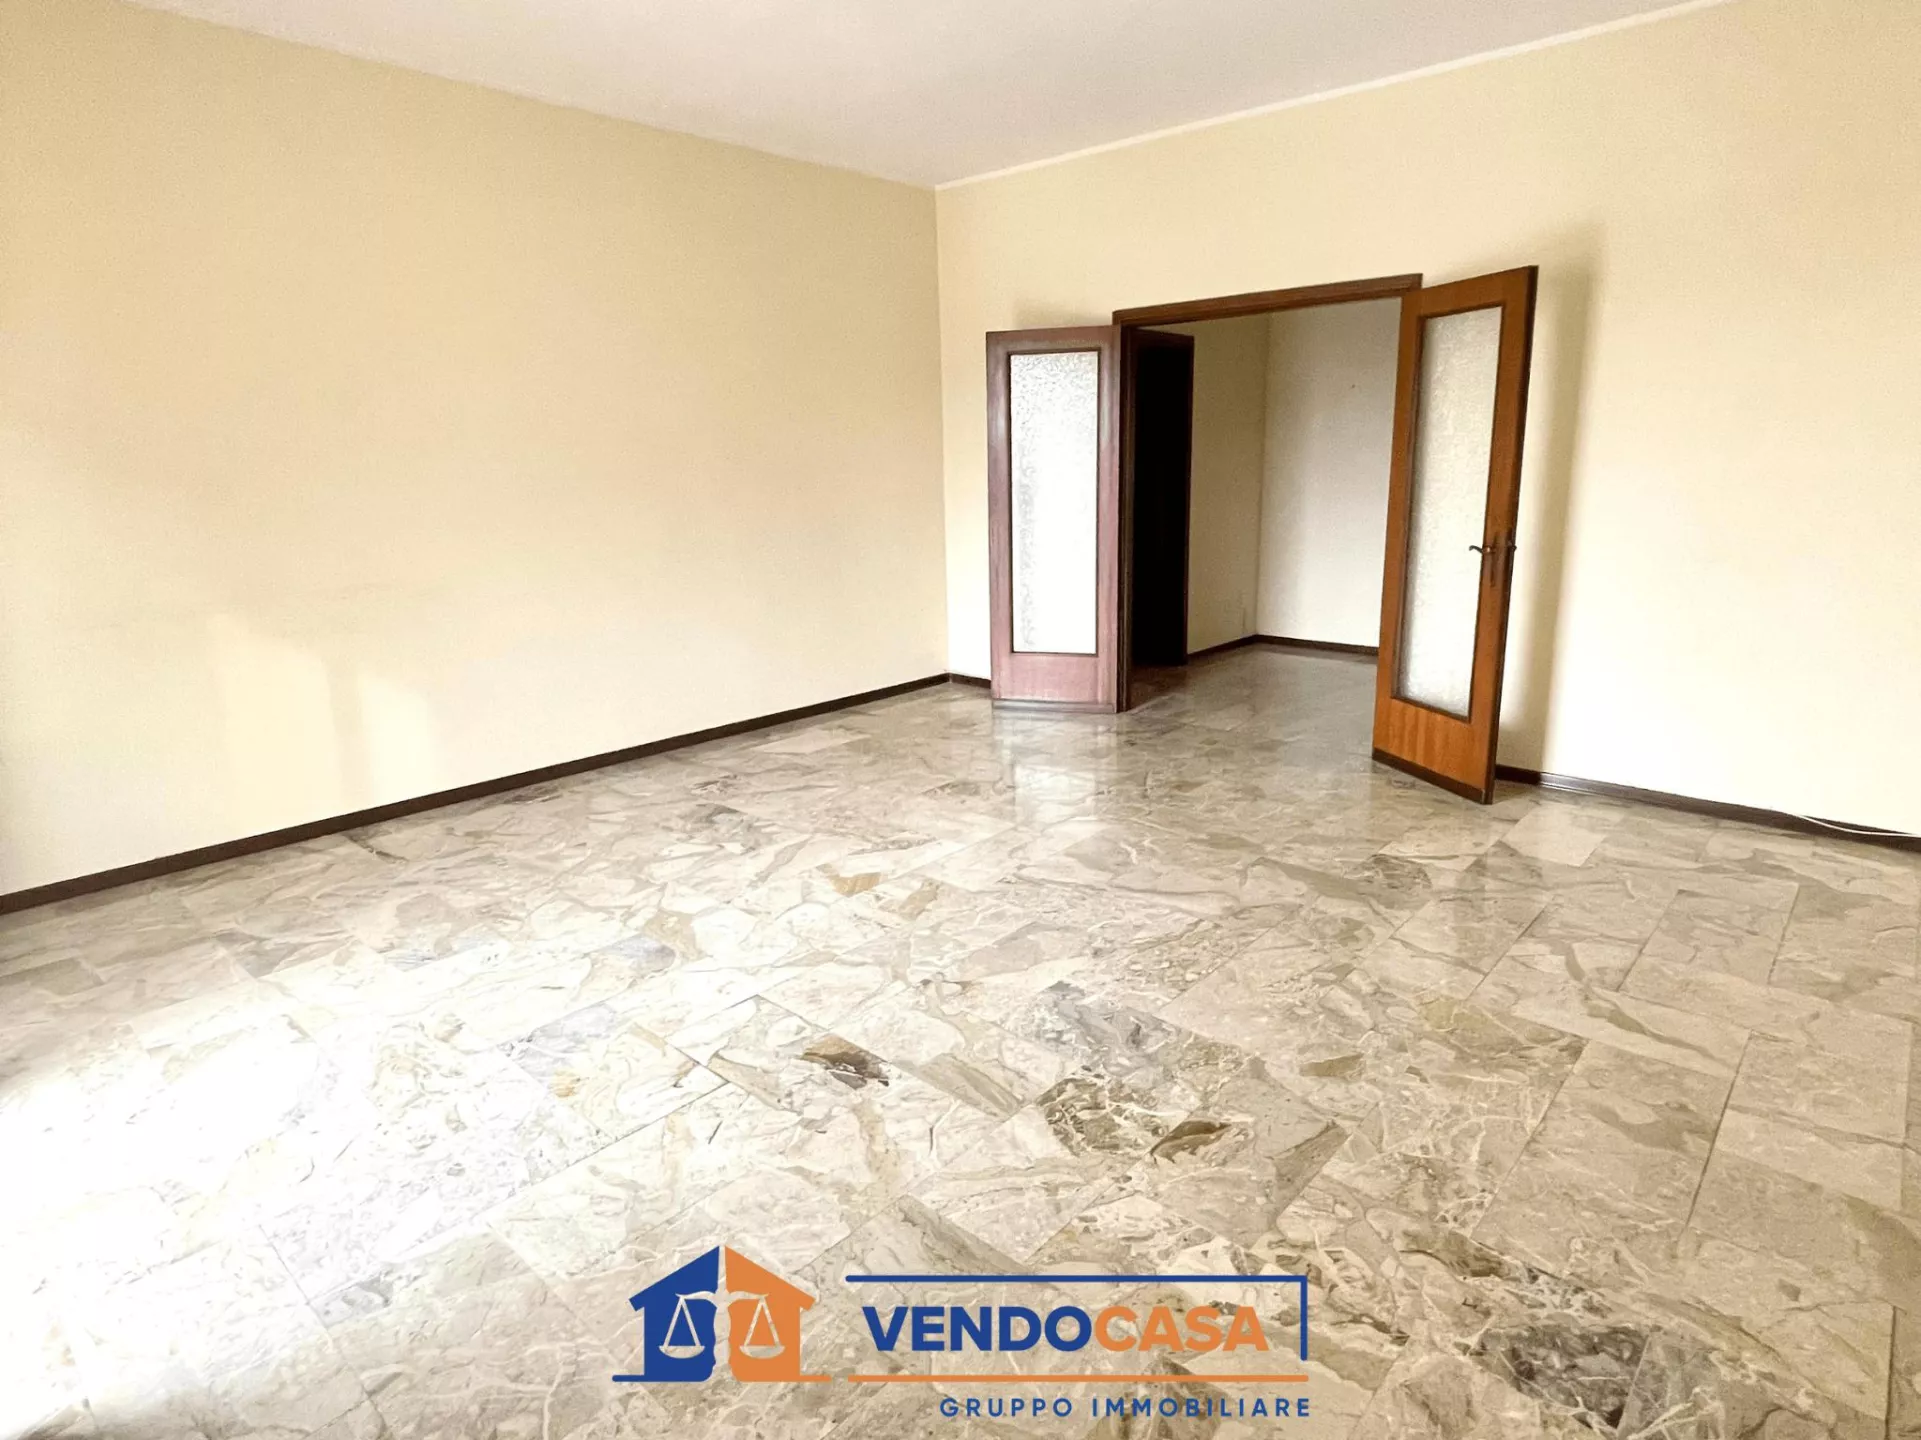 Immagine per Appartamento in vendita a Piacenza via Manfredi 12